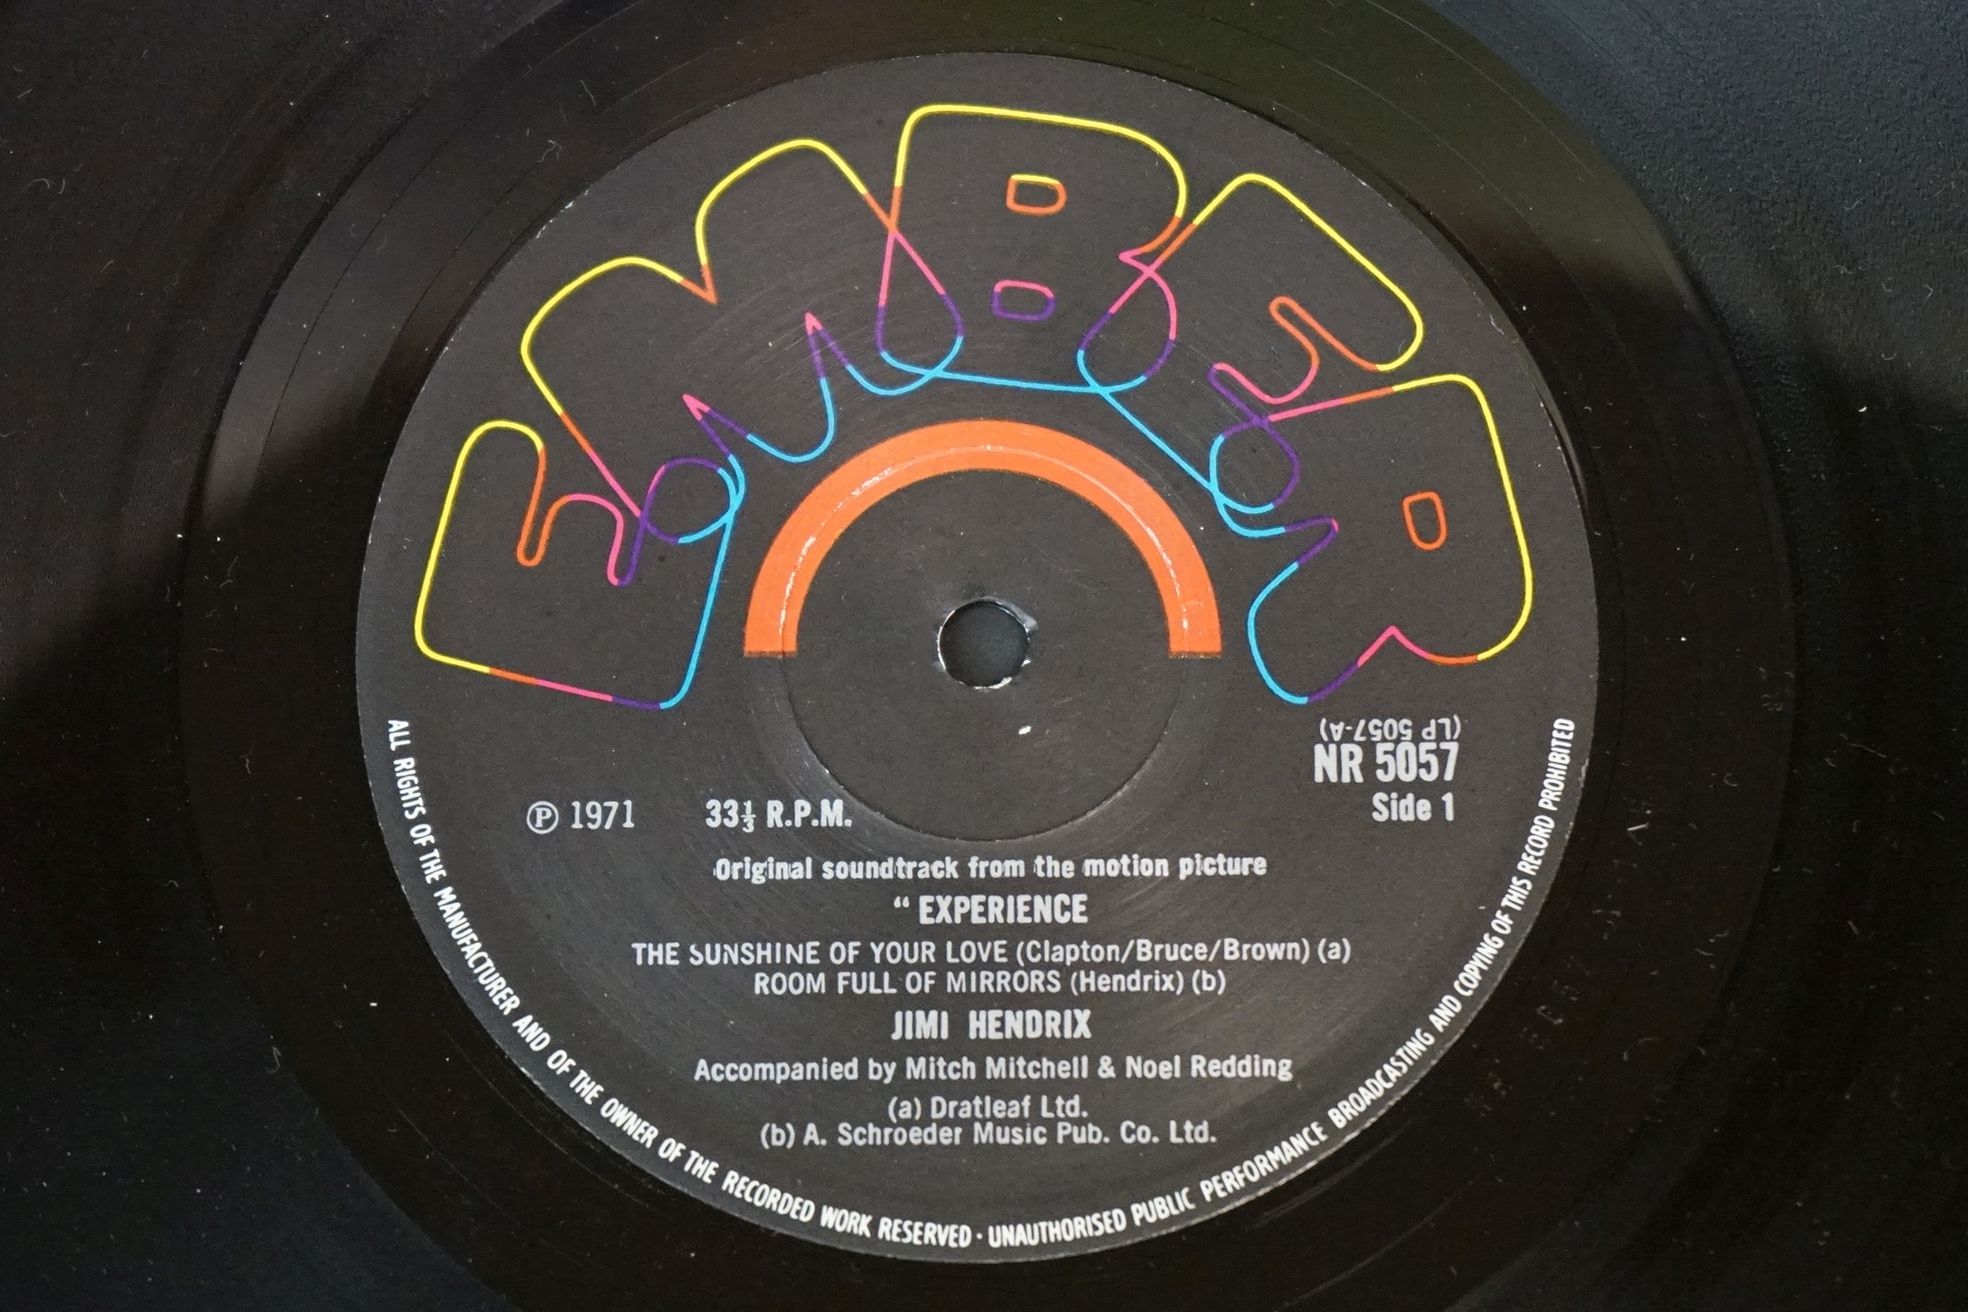 Vinyl - 7 Jimi Hendrix LPs to include Rainbow Bridge (soundtrack), Smash Hits, Isle Of Wight, Band - Image 20 of 21